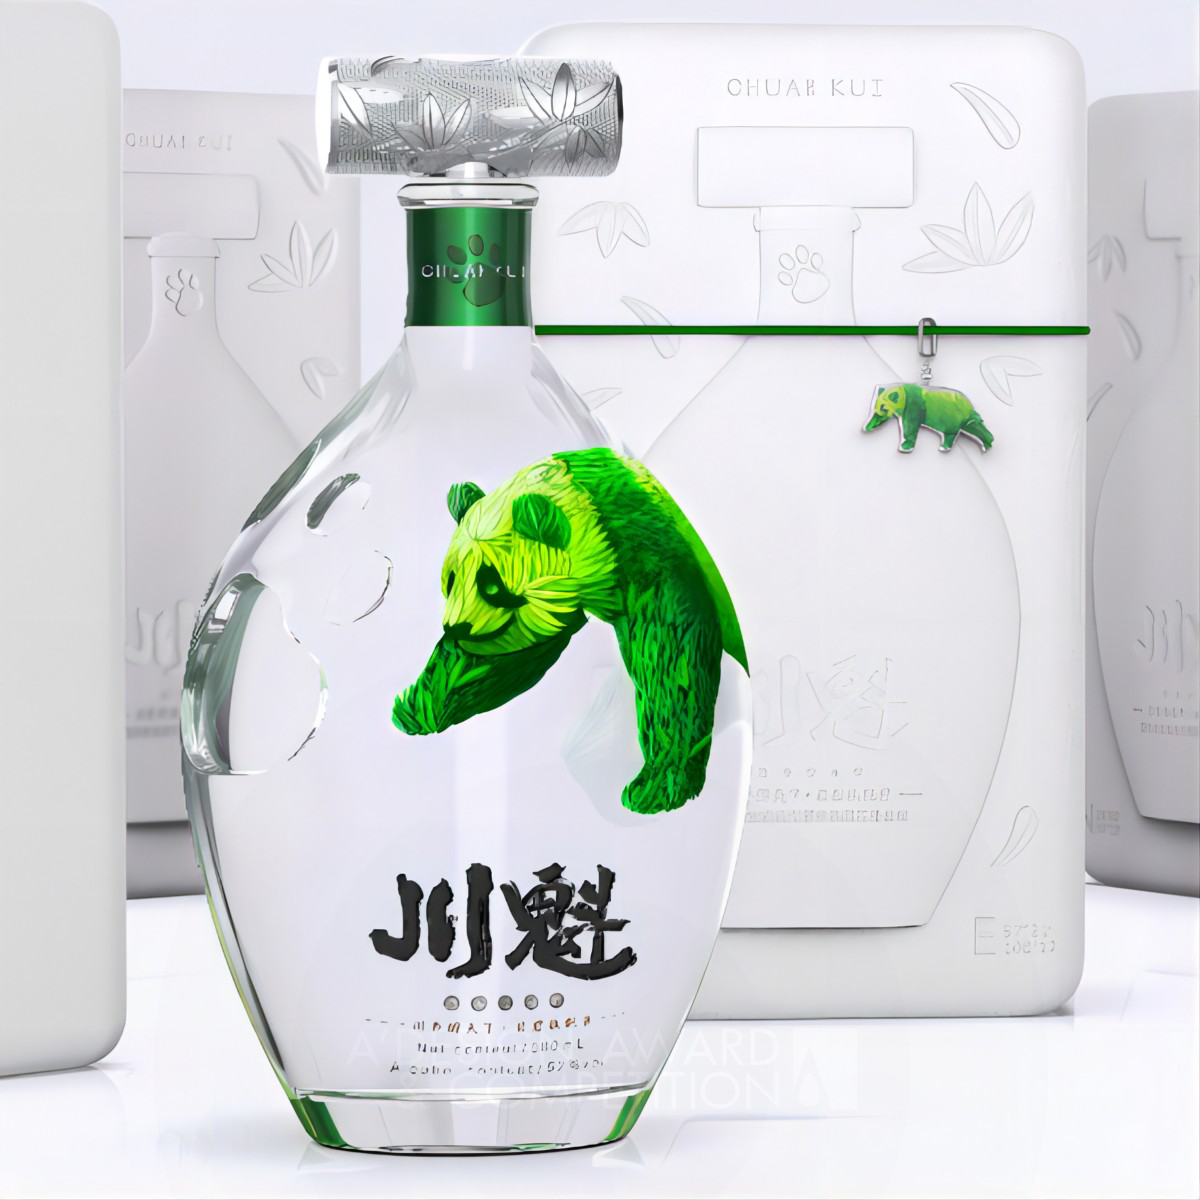 Chuankui Liquor Packaging by Sungoo Design